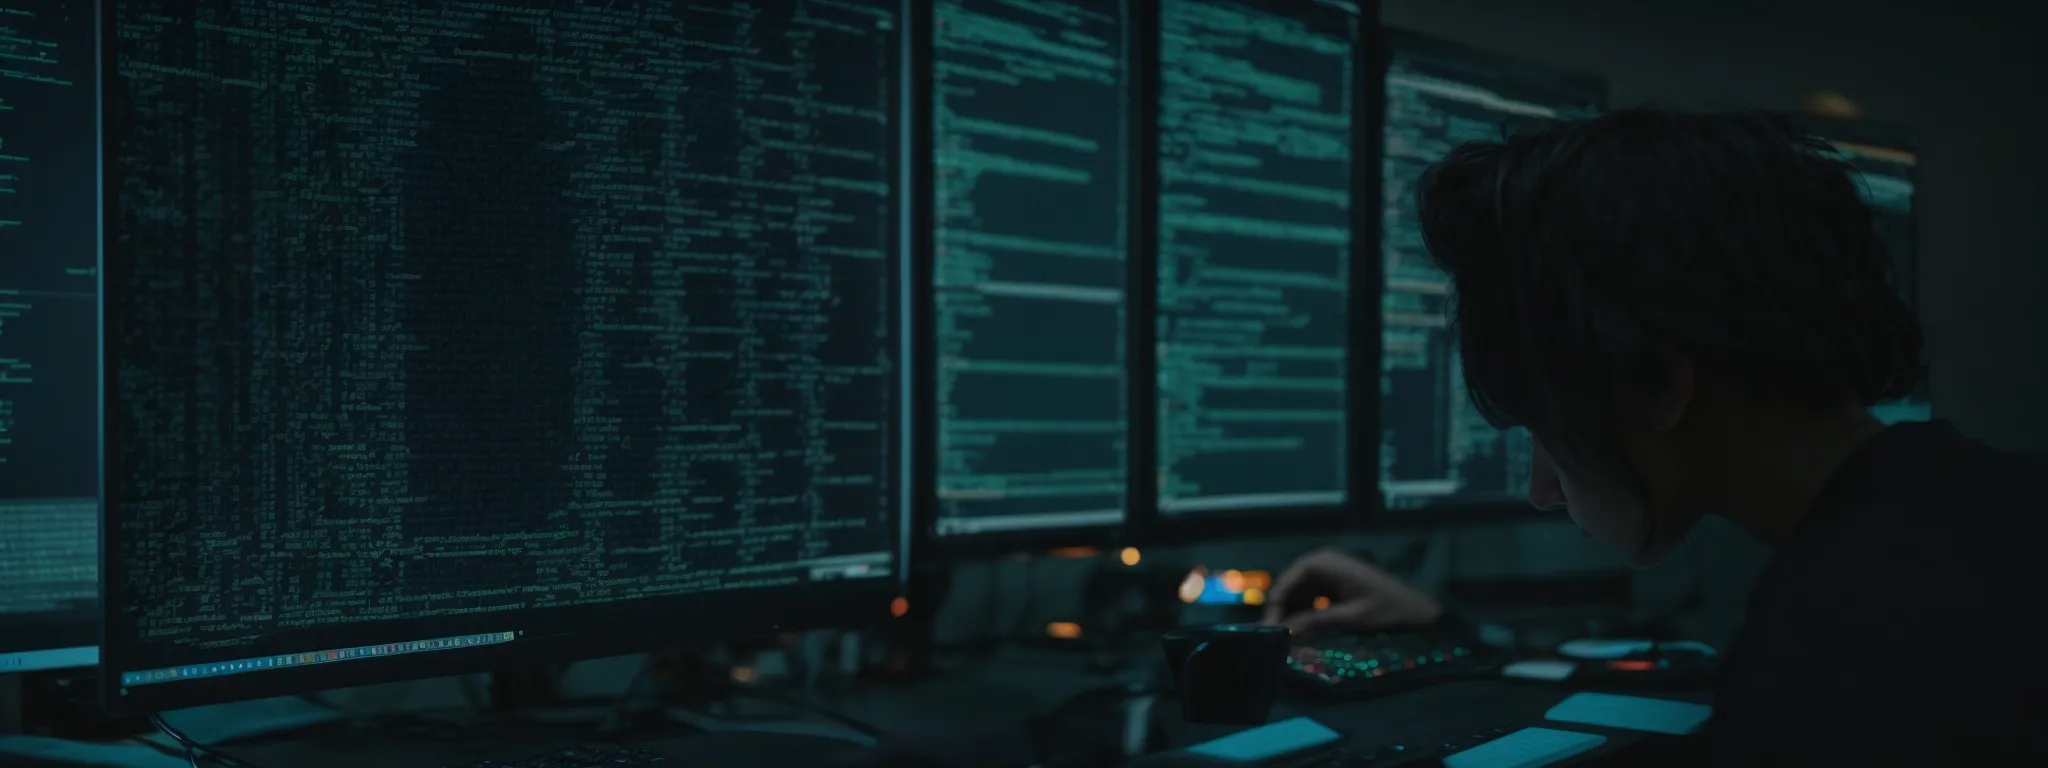 a web developer scrutinizes lines of code on a computer screen, optimizing a website's seo.